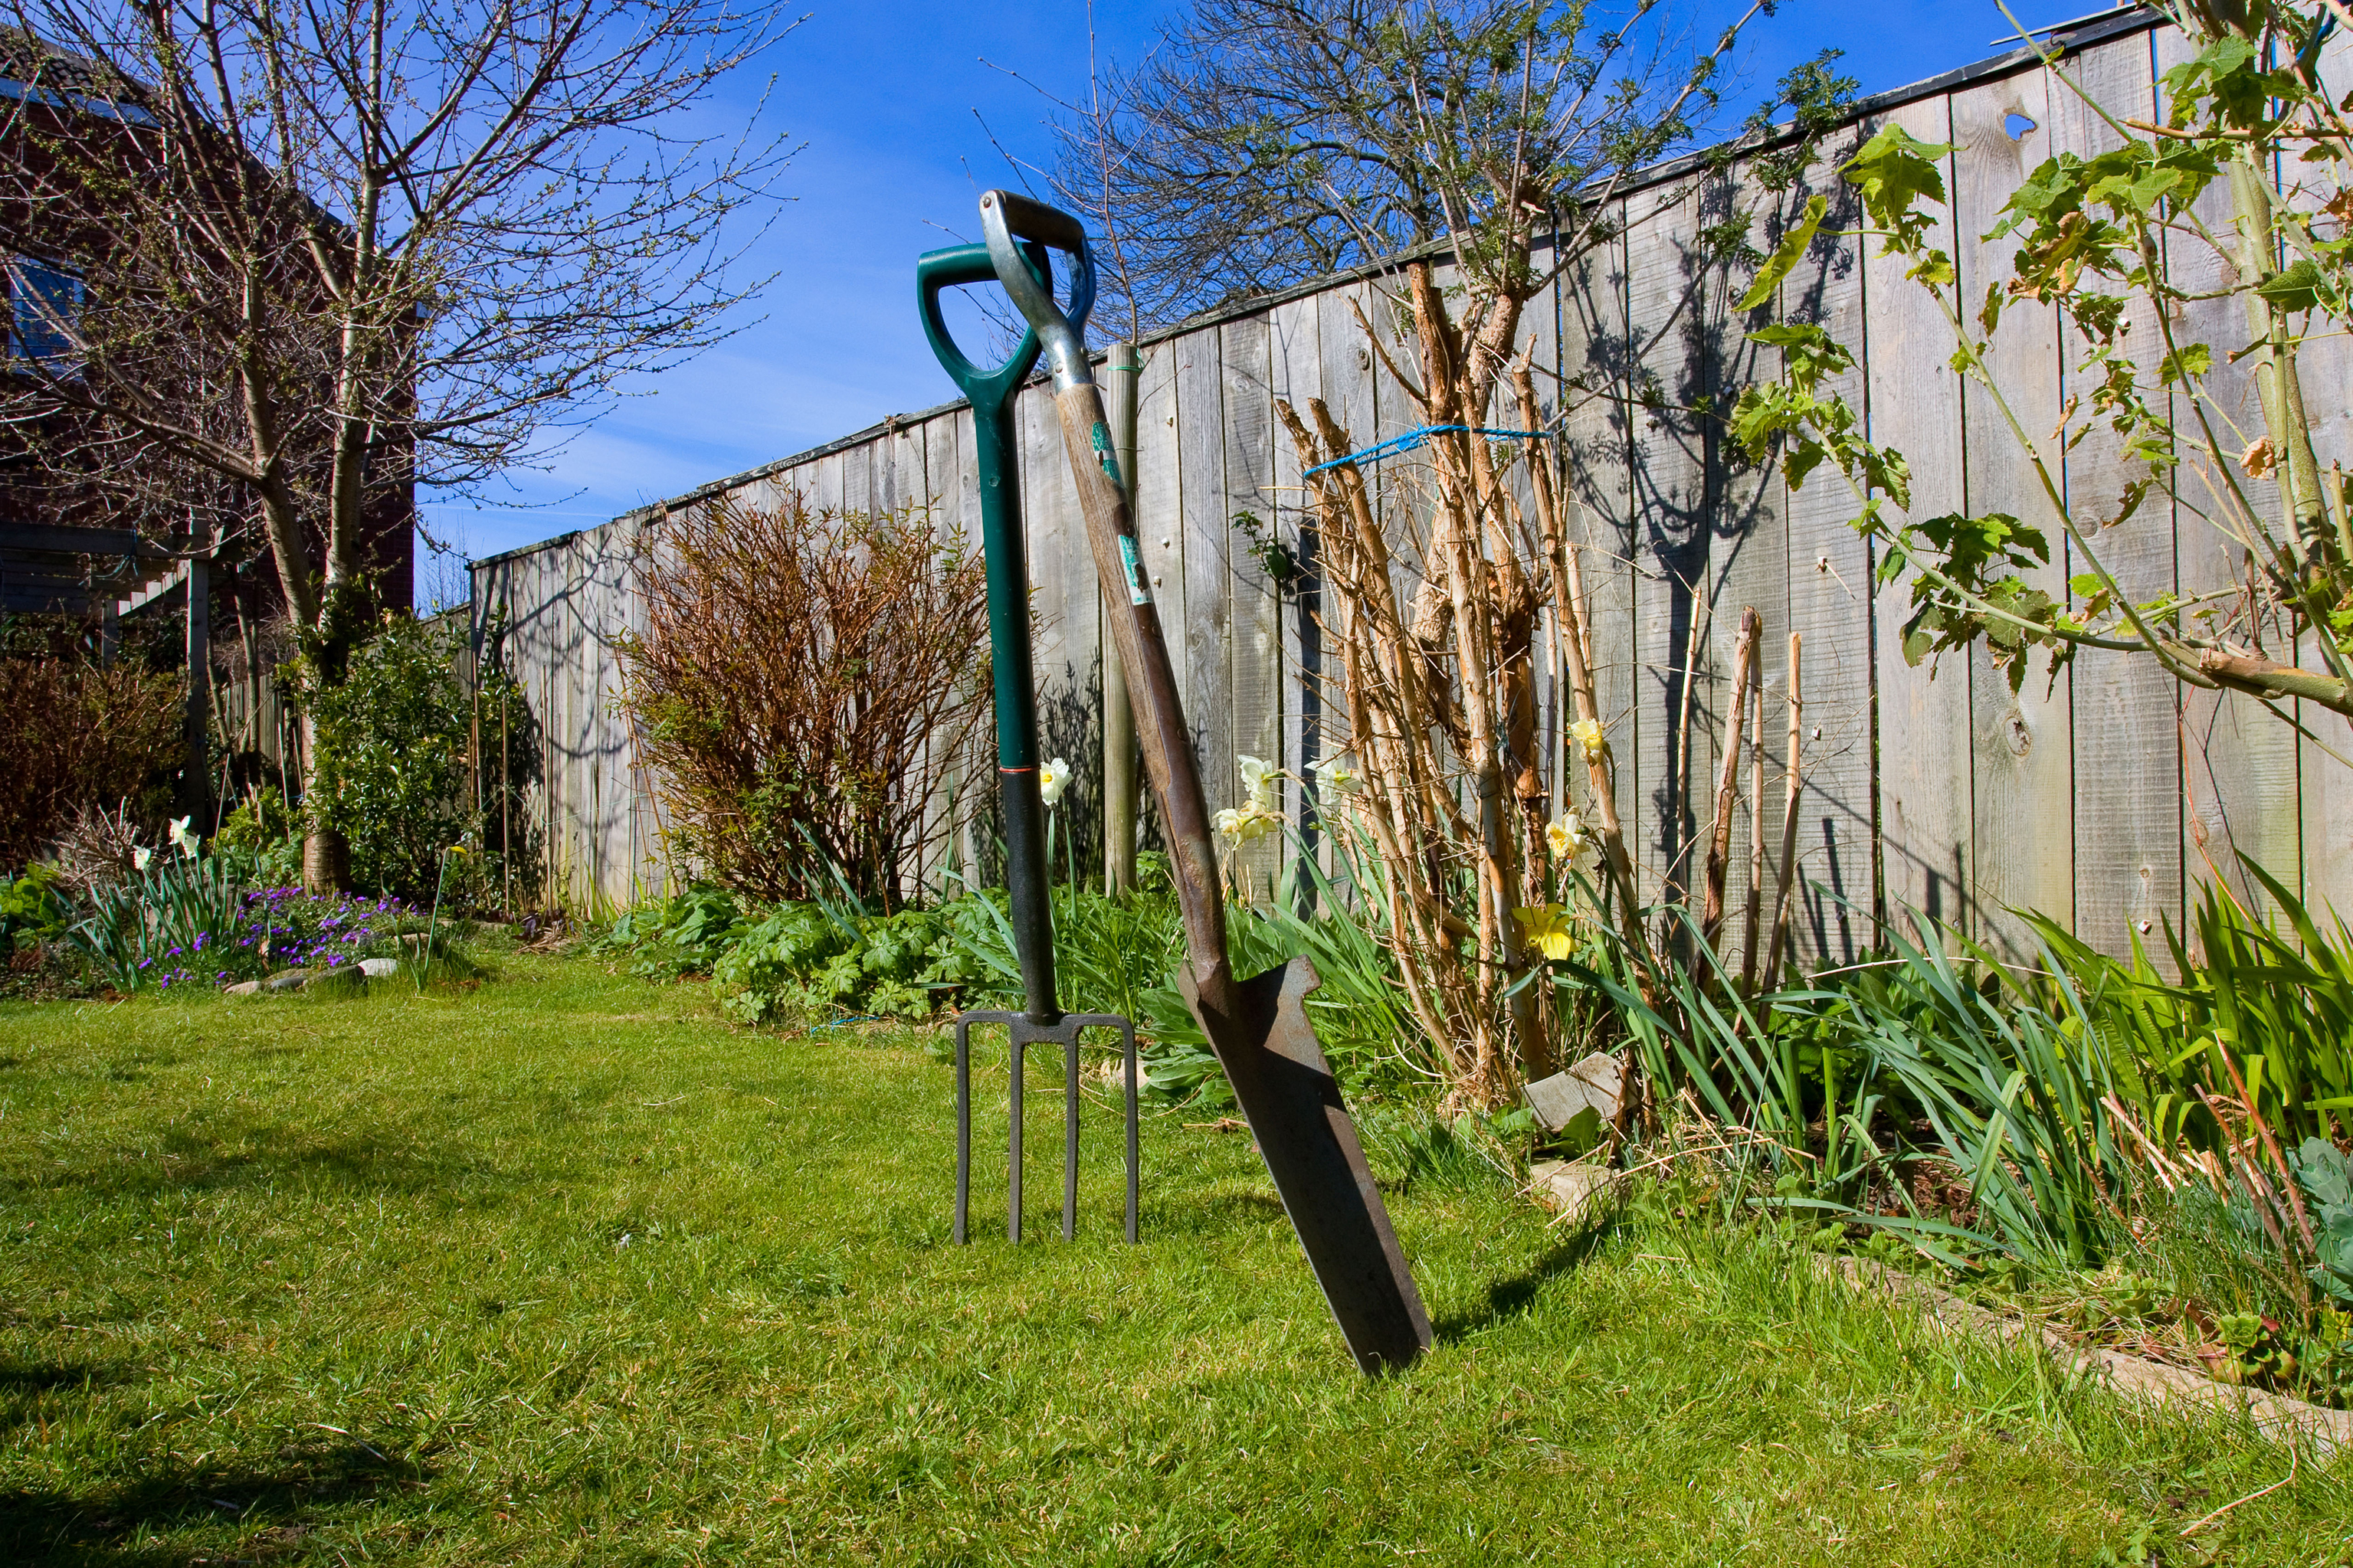 Gardening tools on grass in spring garden